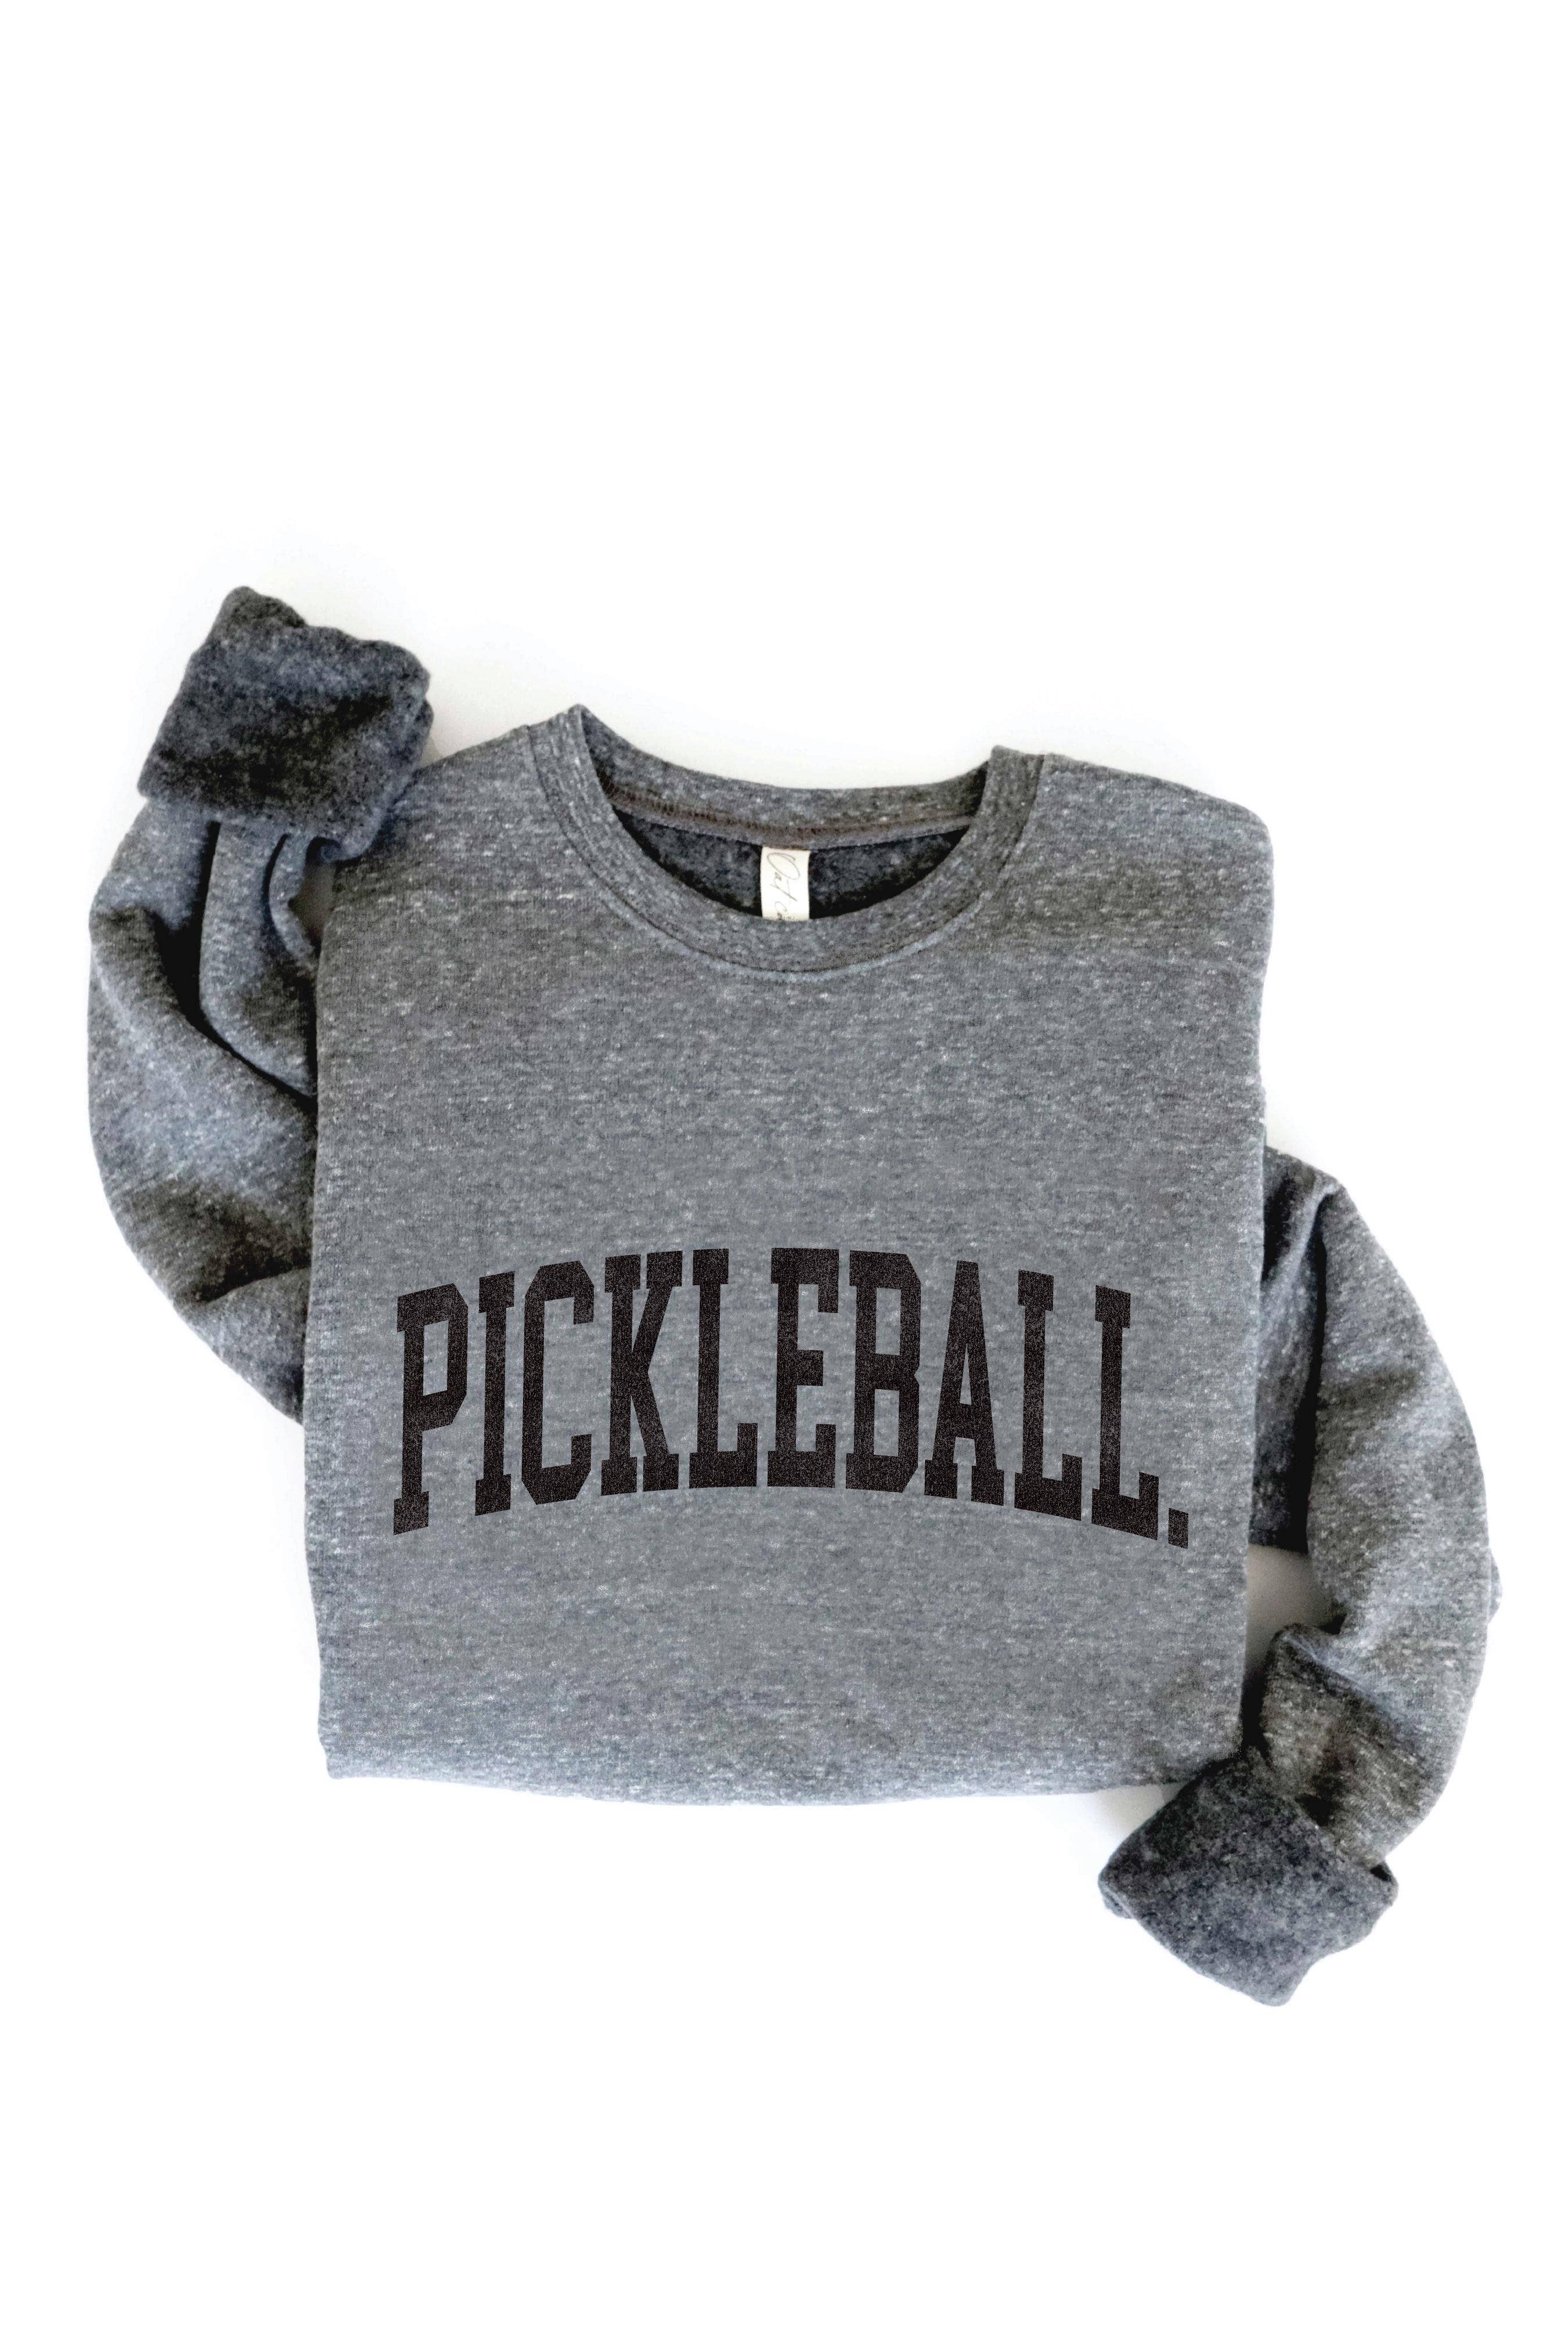 PICKLEBALL Graphic Sweatshirt: XL / ATHLETIC HEATHER